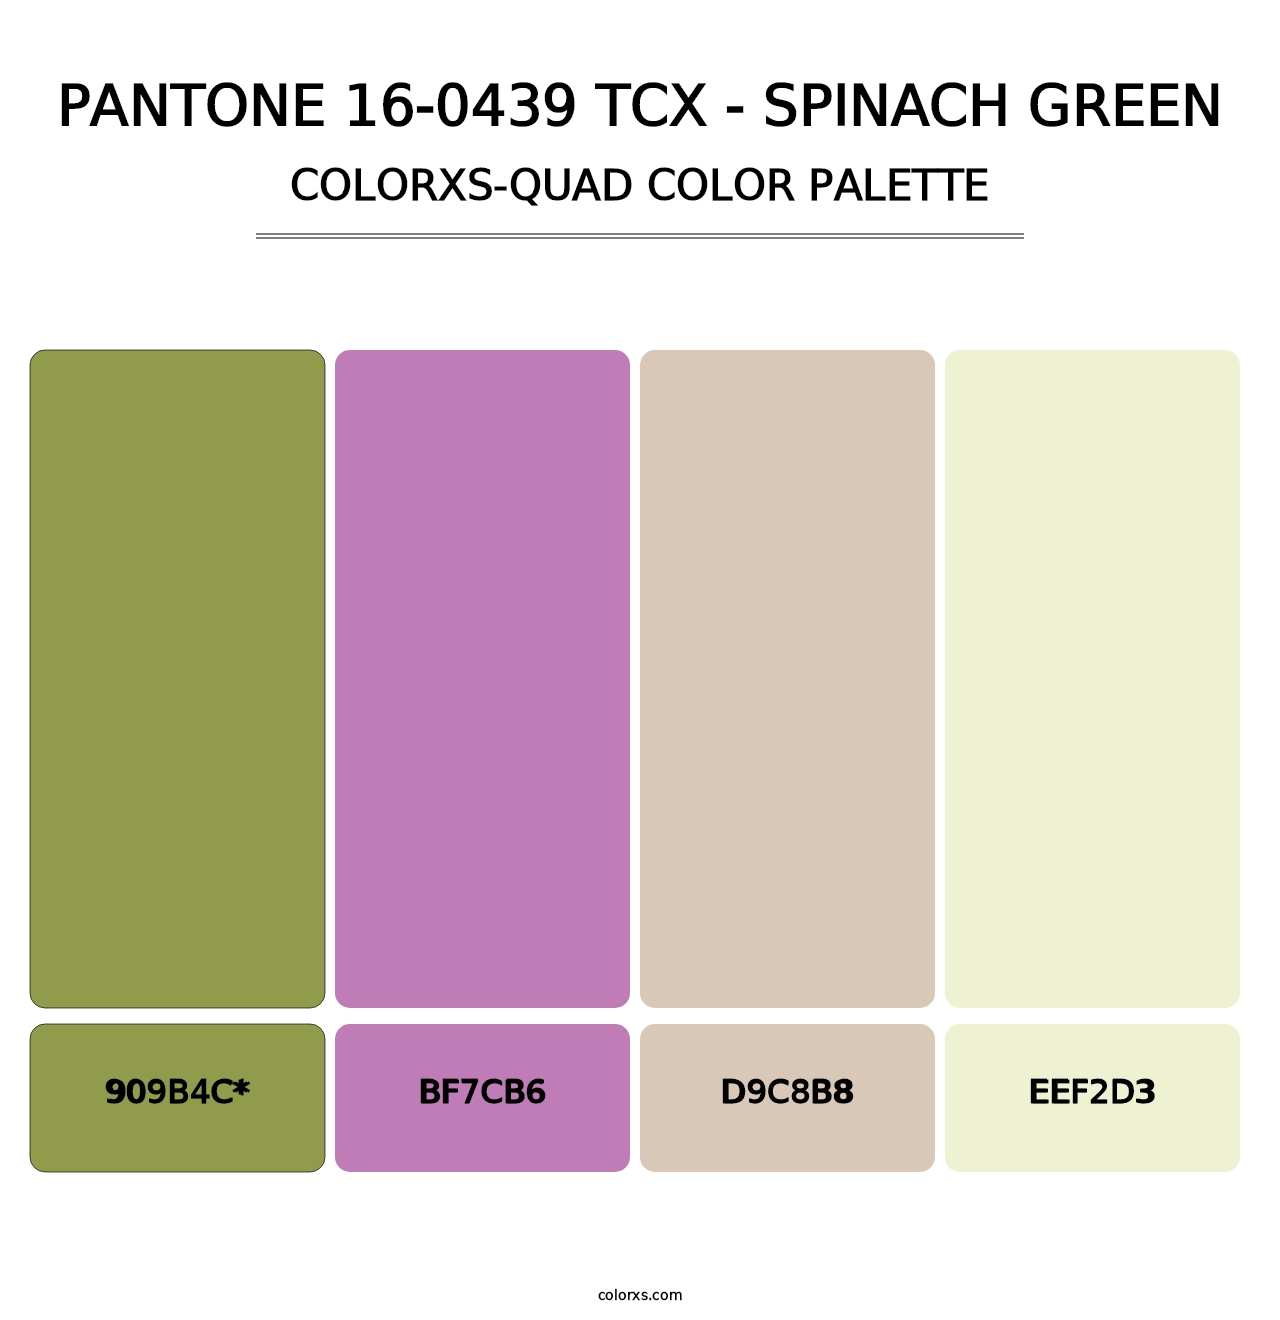 PANTONE 16-0439 TCX - Spinach Green - Colorxs Quad Palette